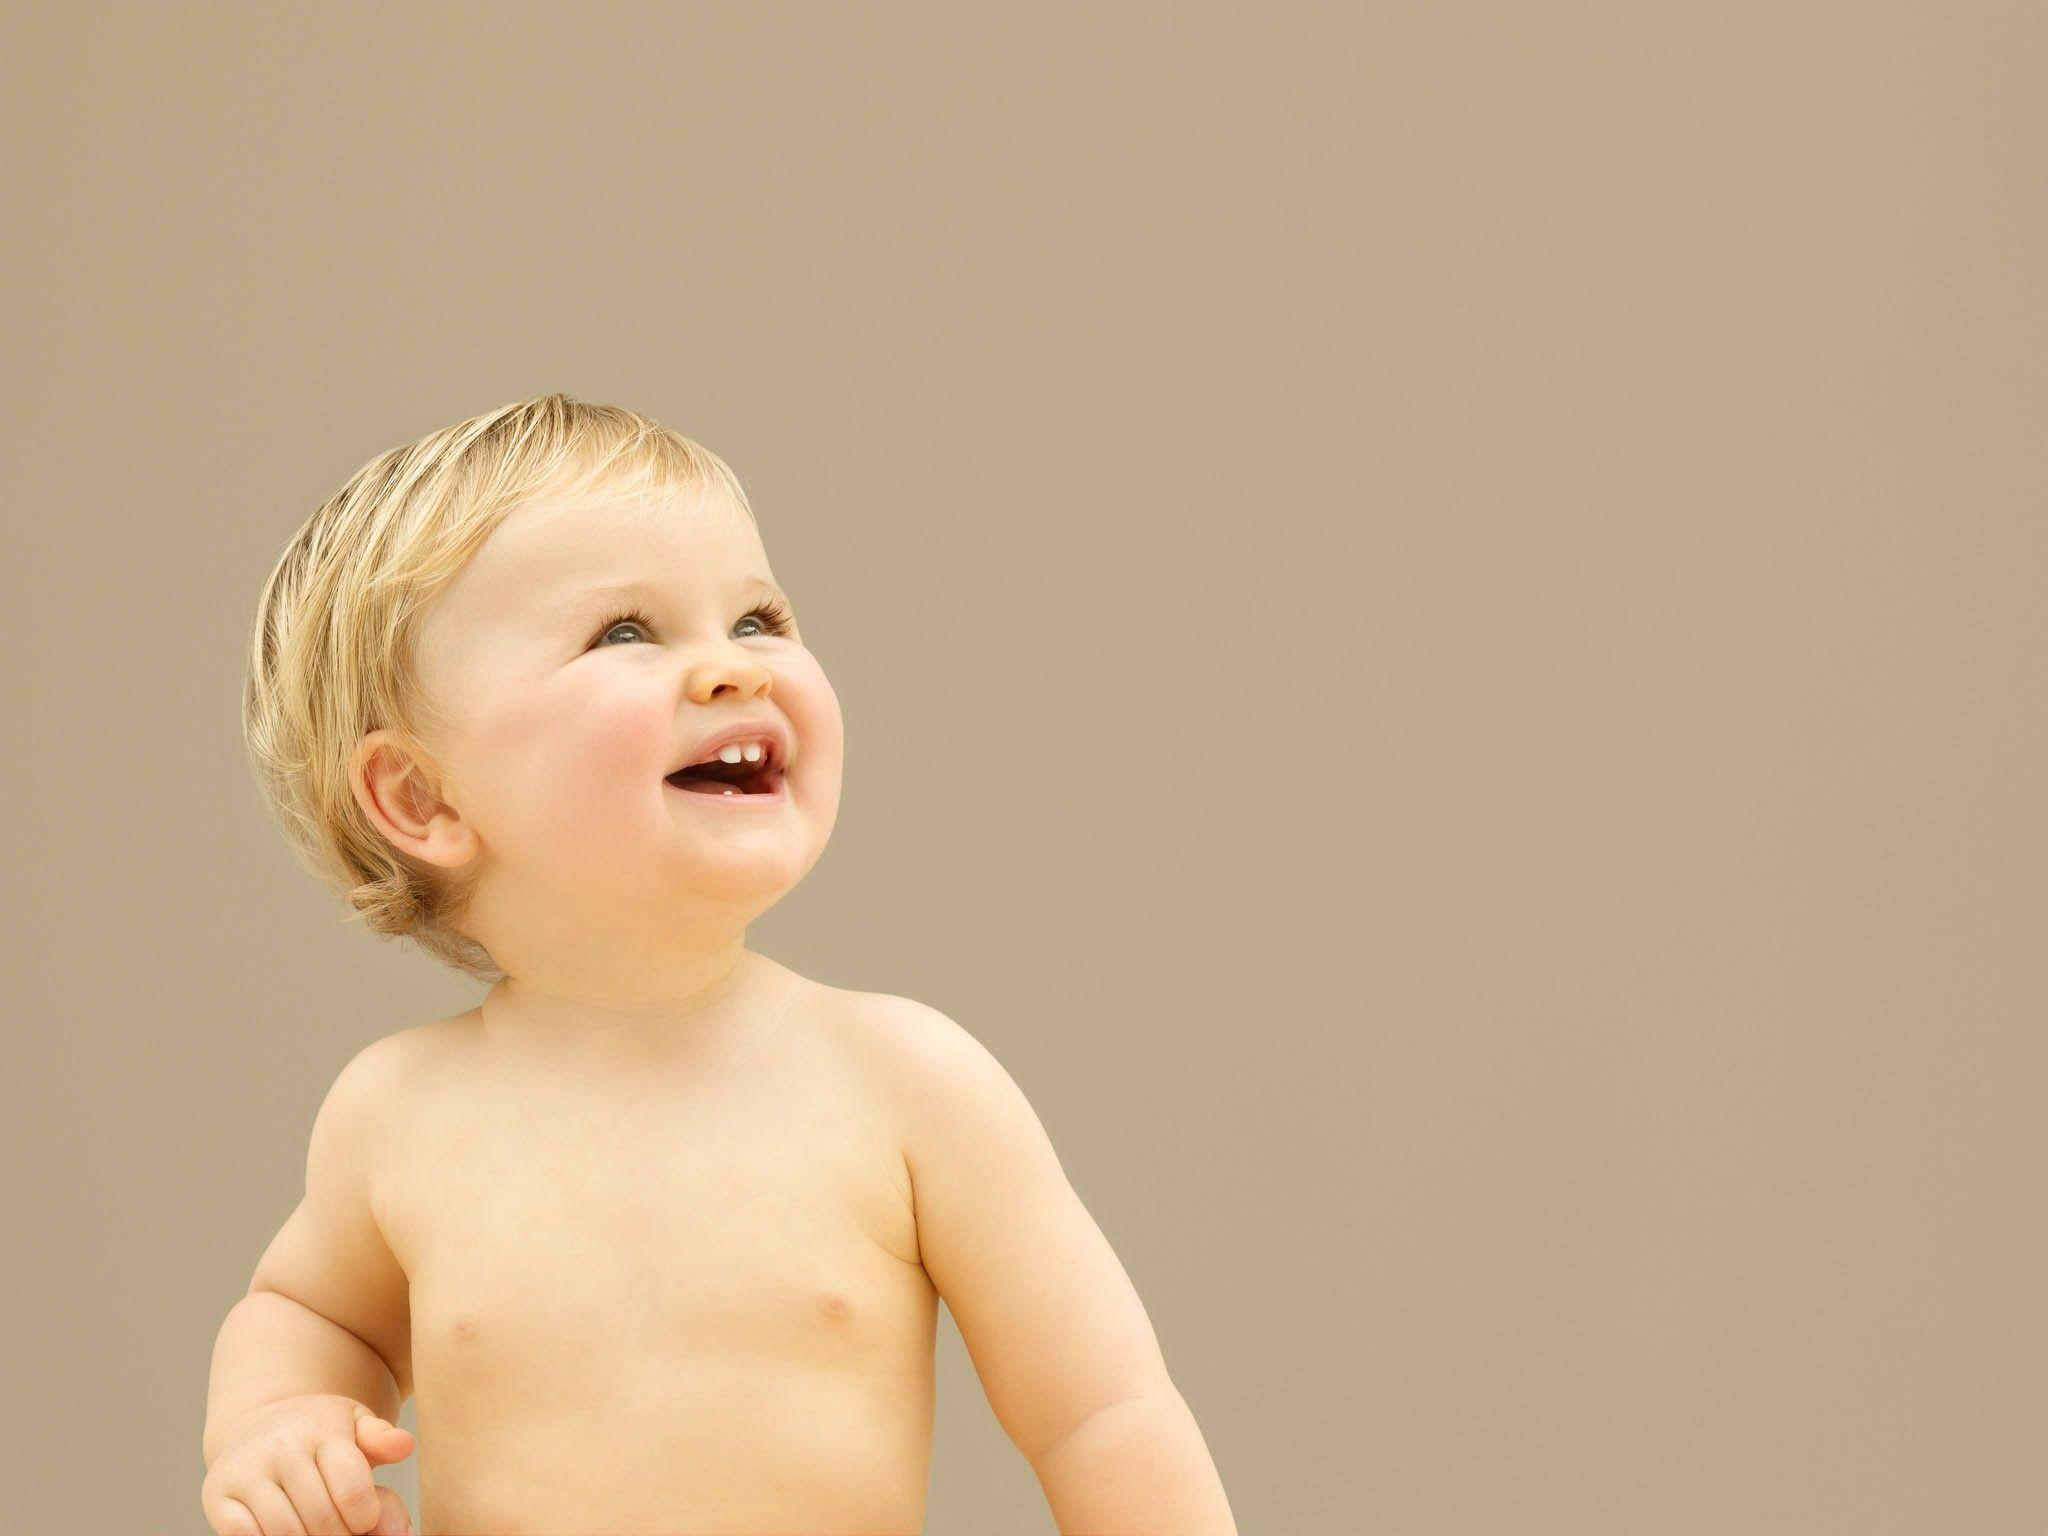 Cute Kid Smiling Wallpaper. HD .hdwallpaper.in